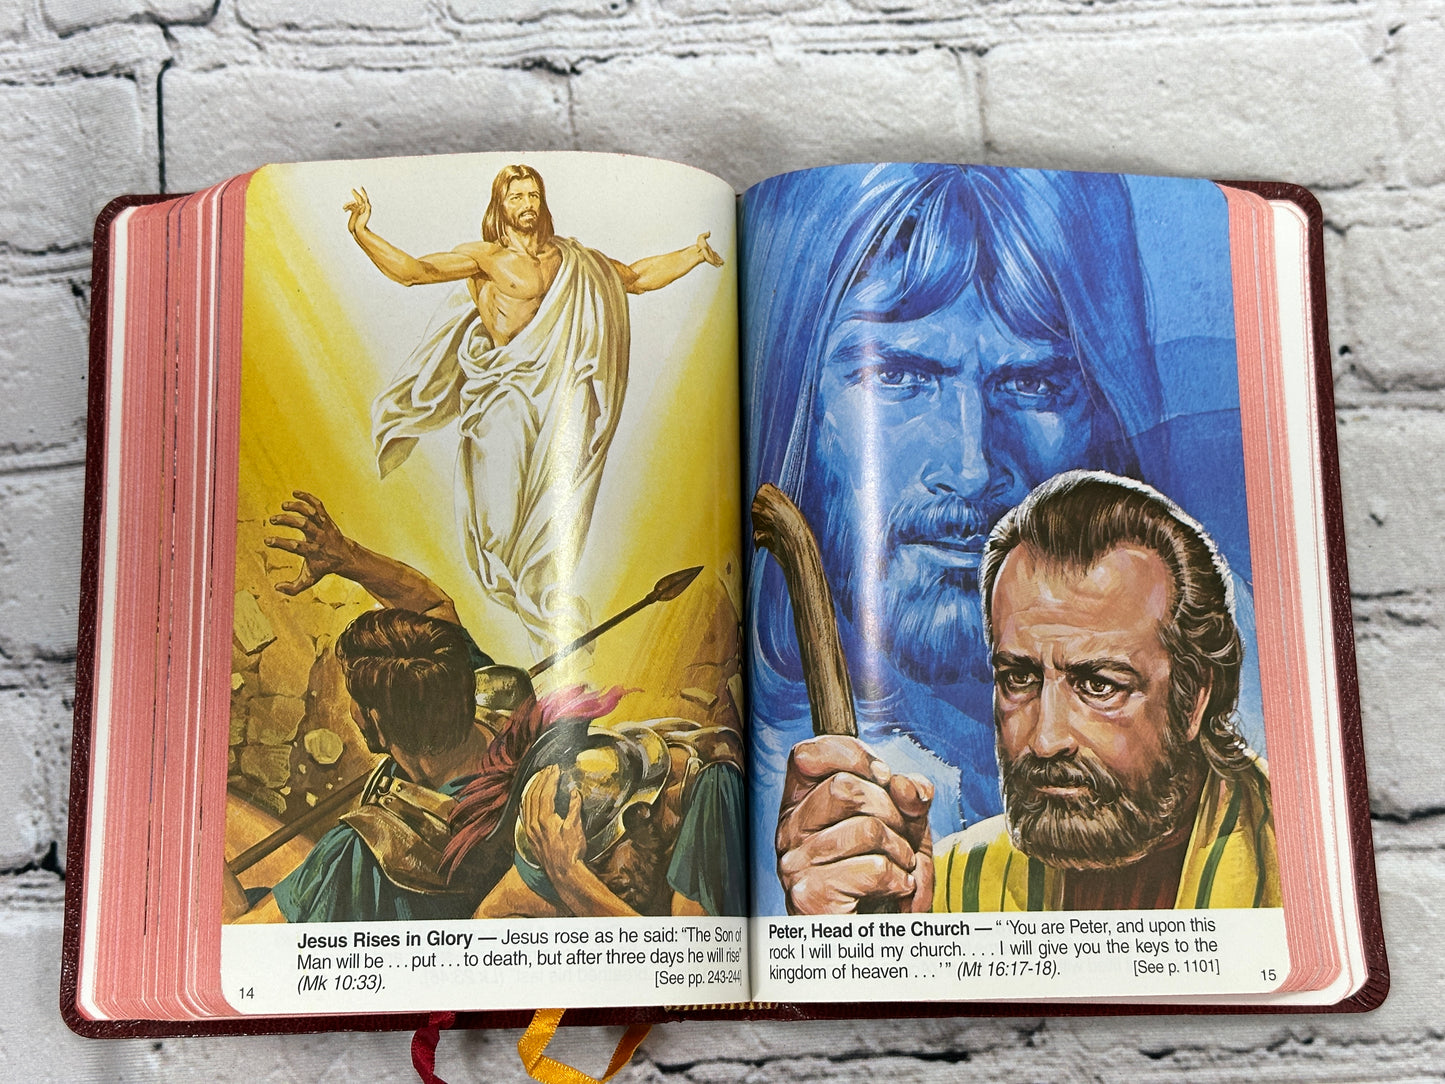 New... Saint Joseph Sunday Missal [Complete · Giant Type Edition · 2003]